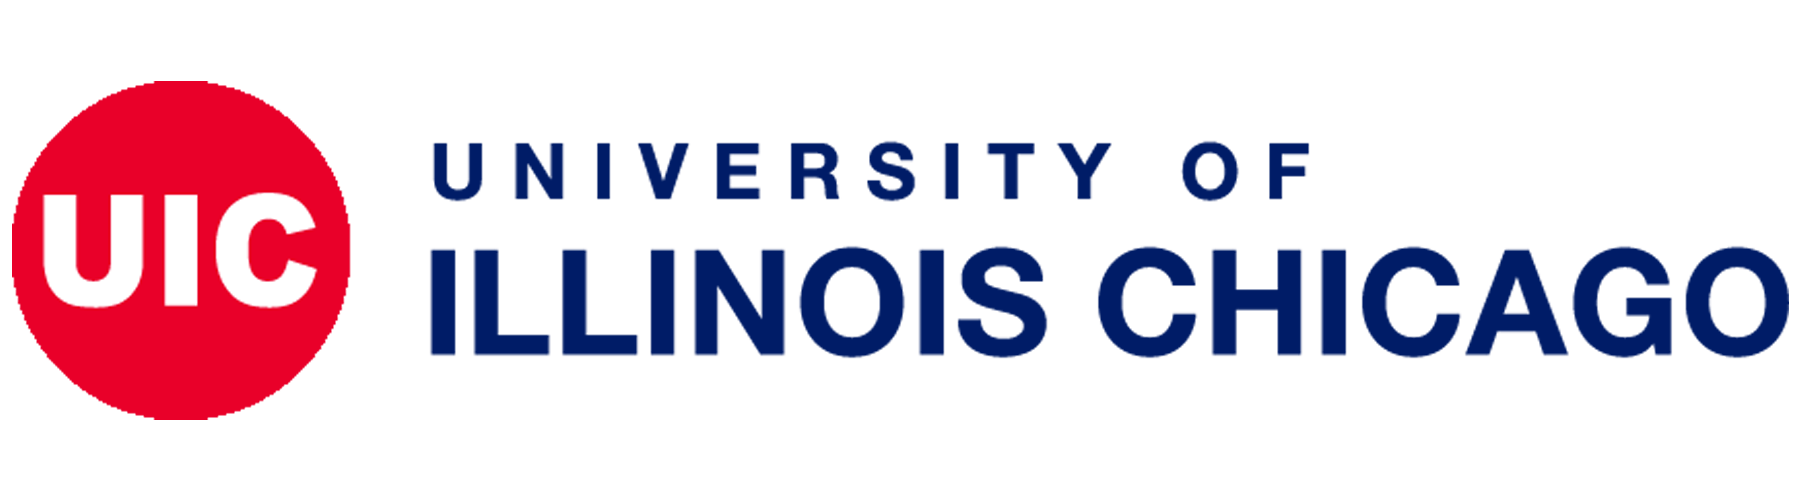 University_of_Illinois_Chicago_wordmark